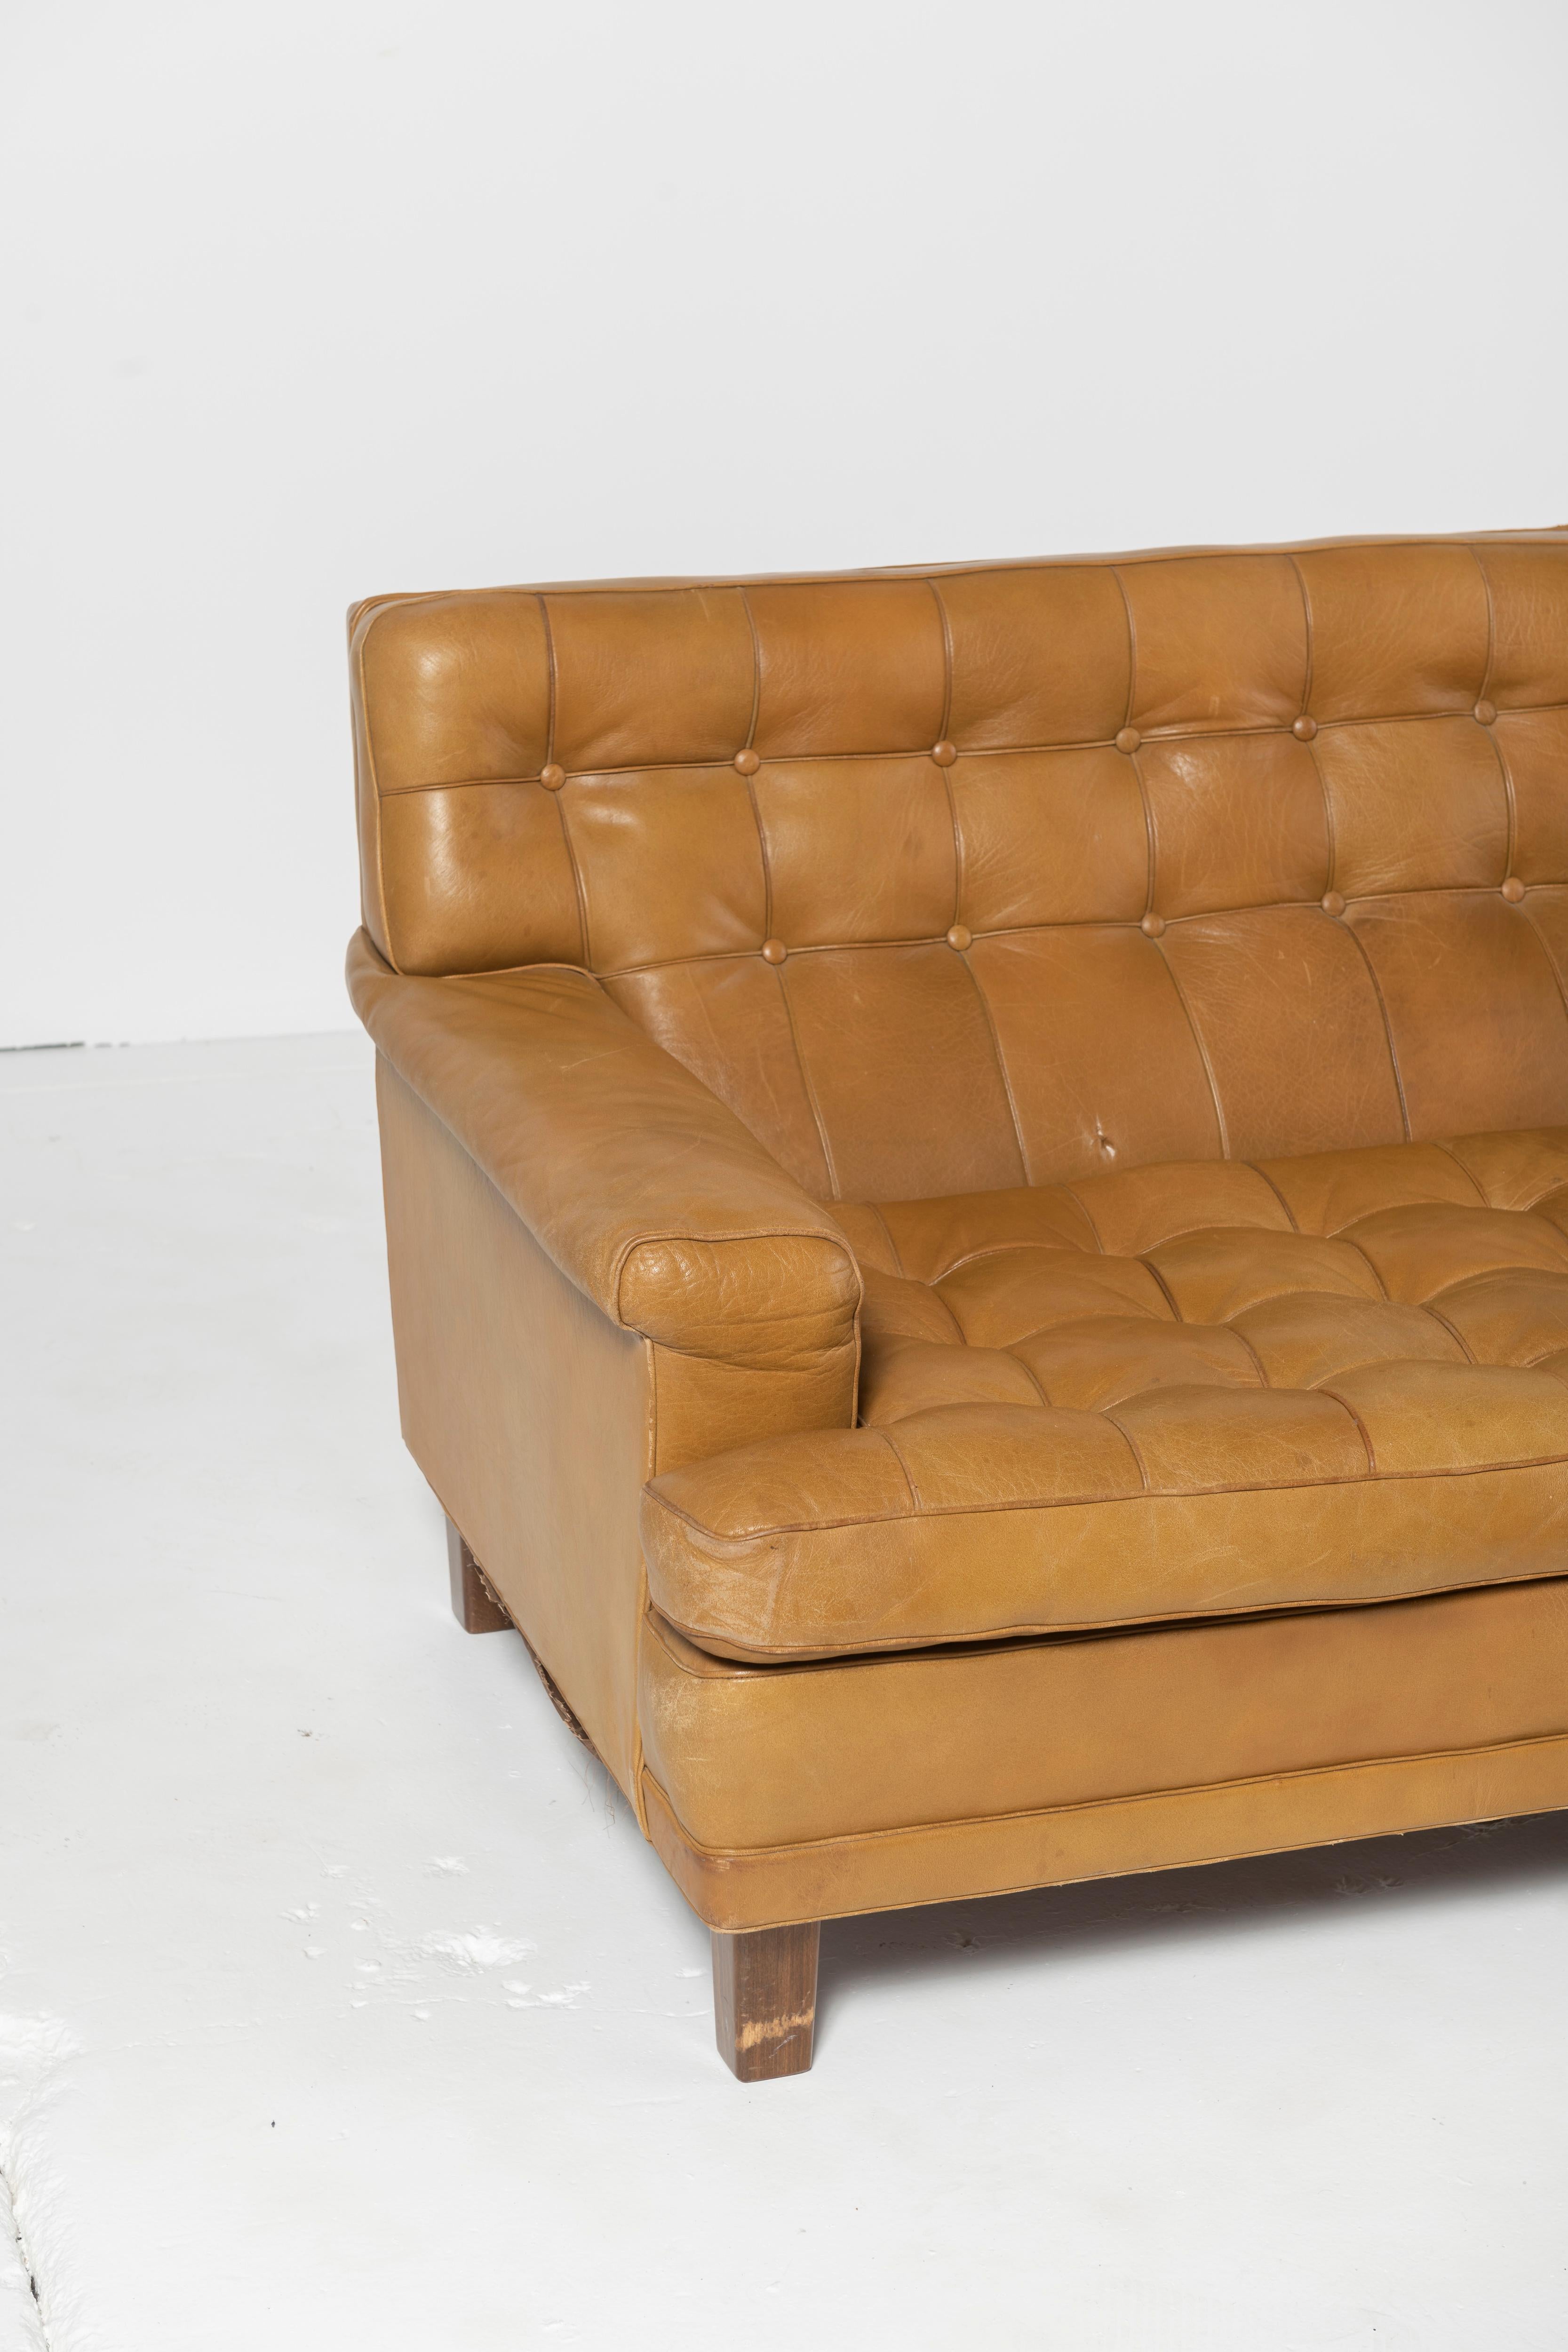 Swedish Mid-Century Modern Norell Sofa with Original Buffalo Cognac Leather